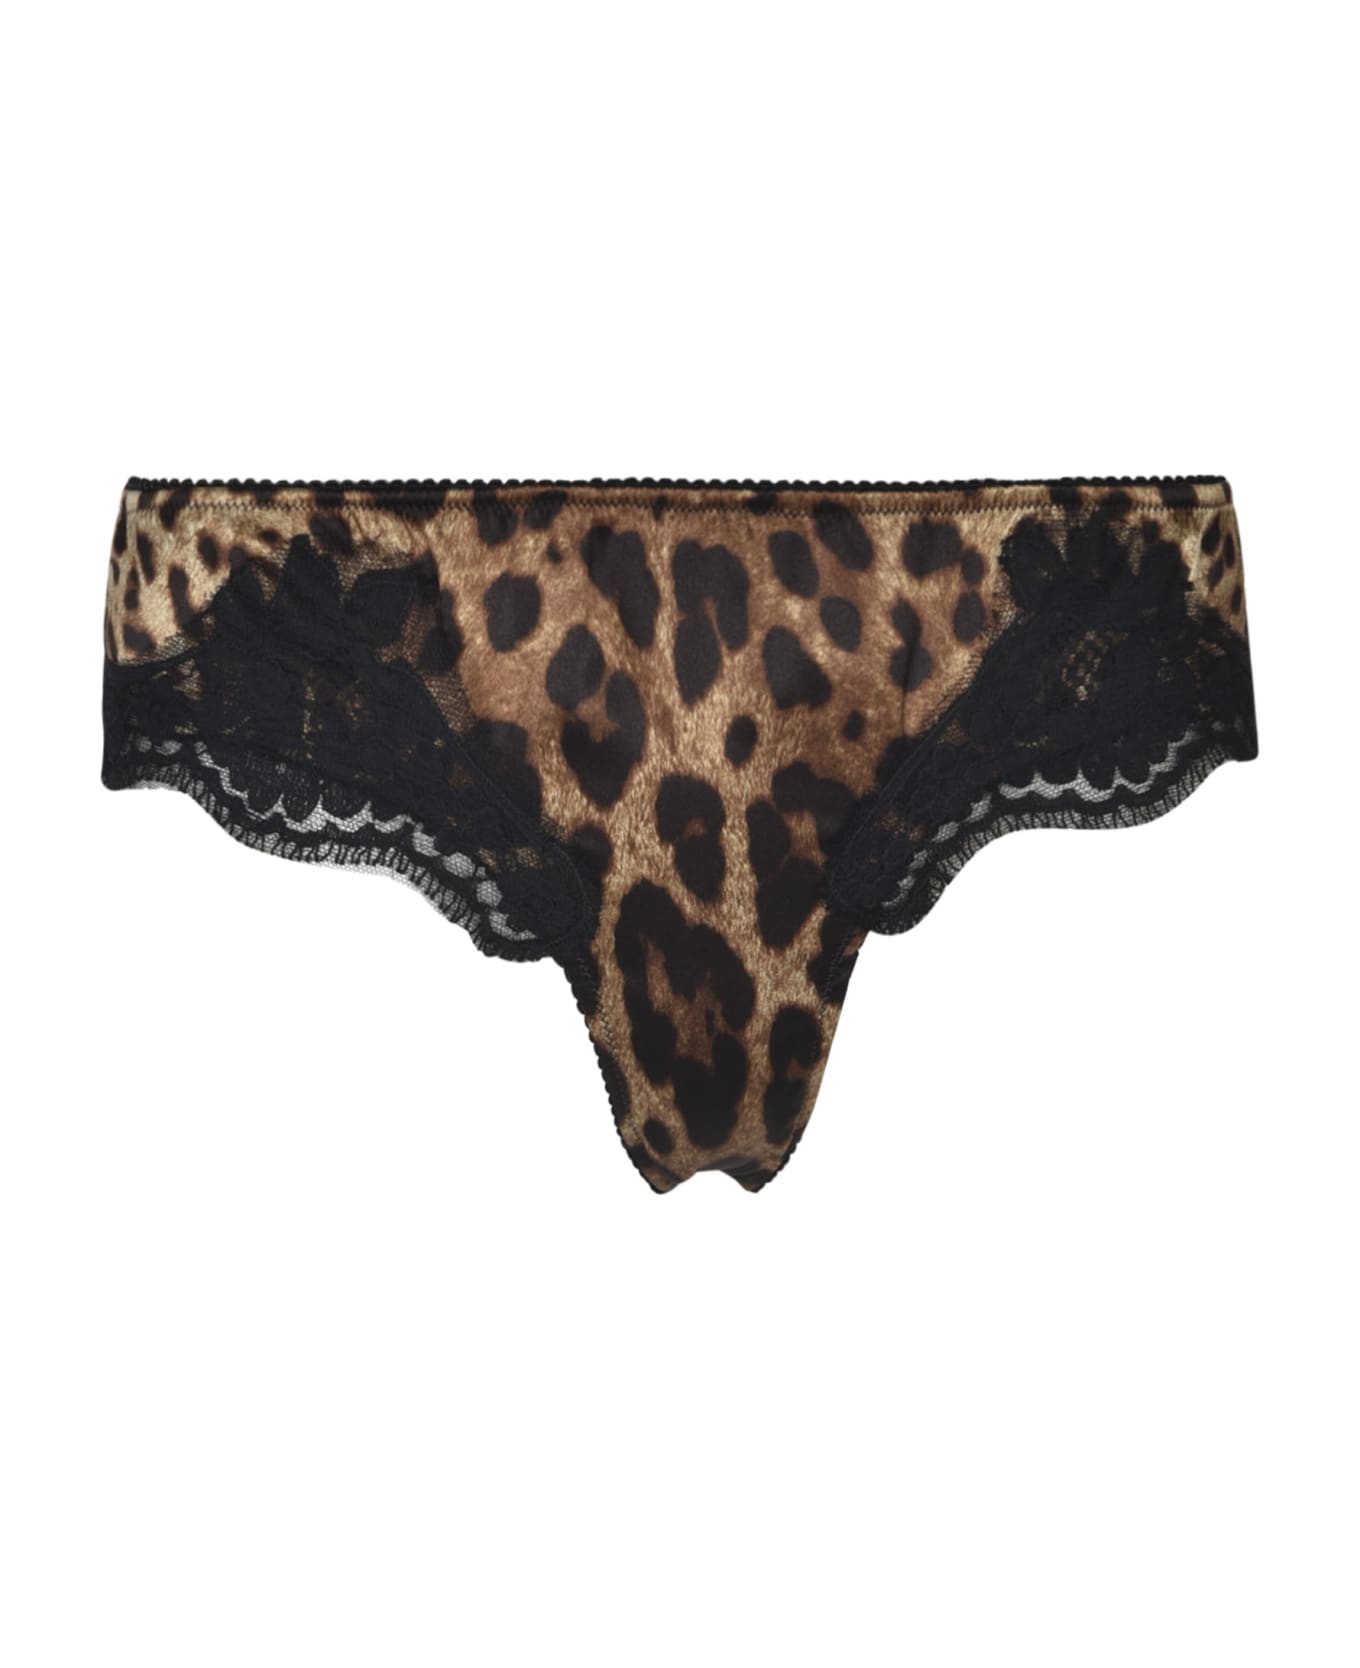 Dolce & Gabbana Animalier Print Lace Paneled Panties - Leopard